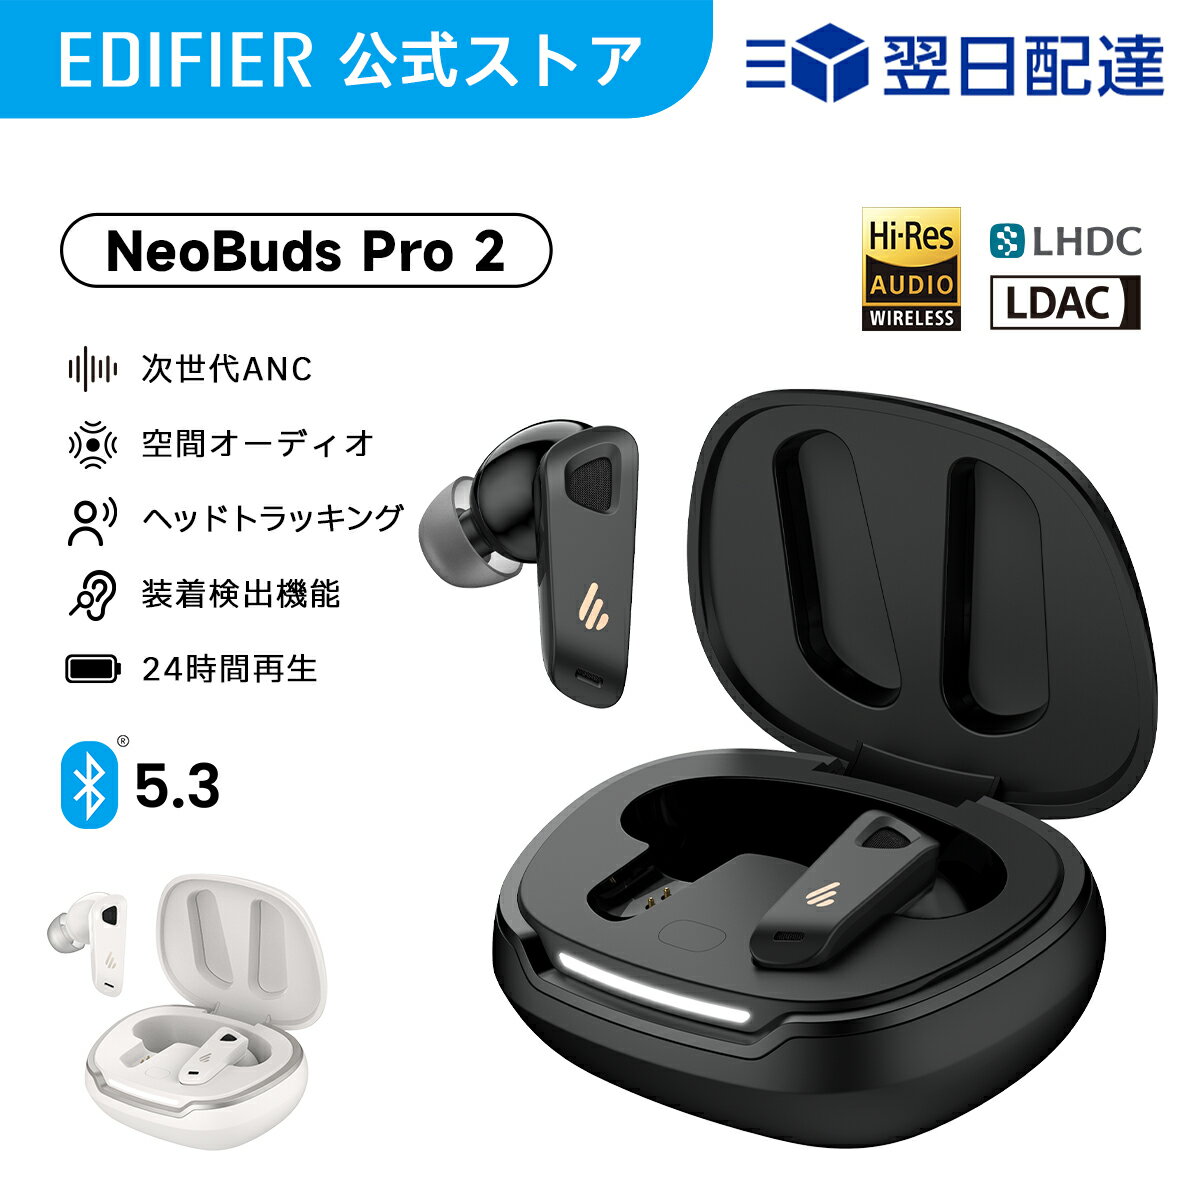 EDIFIER NeoBuds Pro 2 ANC搭載 ワイヤレス 